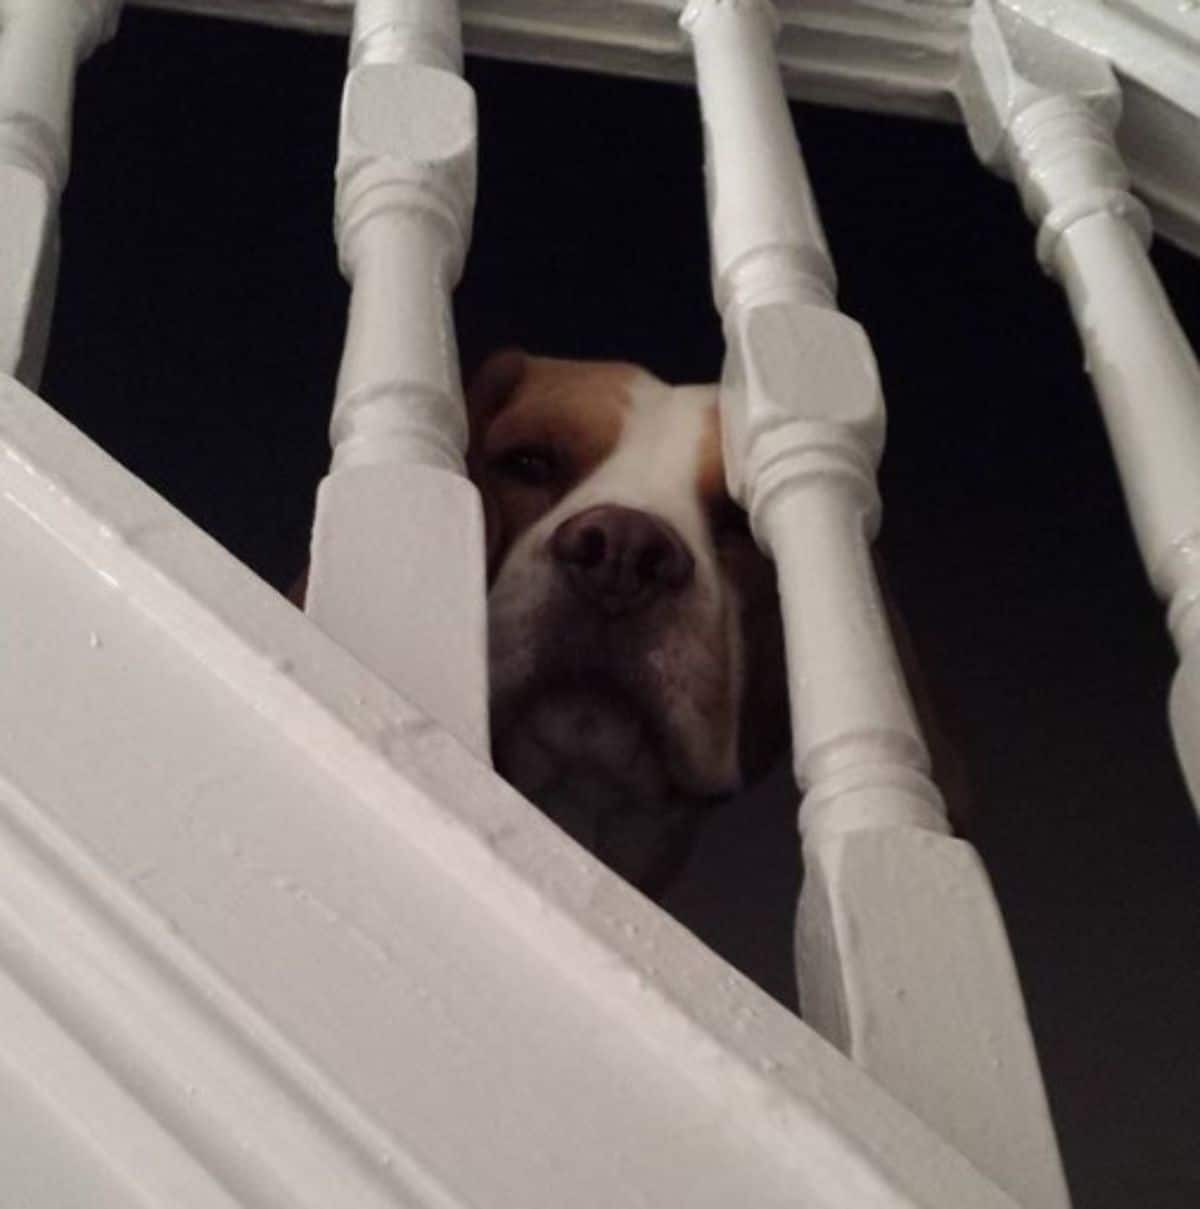 brown and white dog peeking through the white railings of a staircase